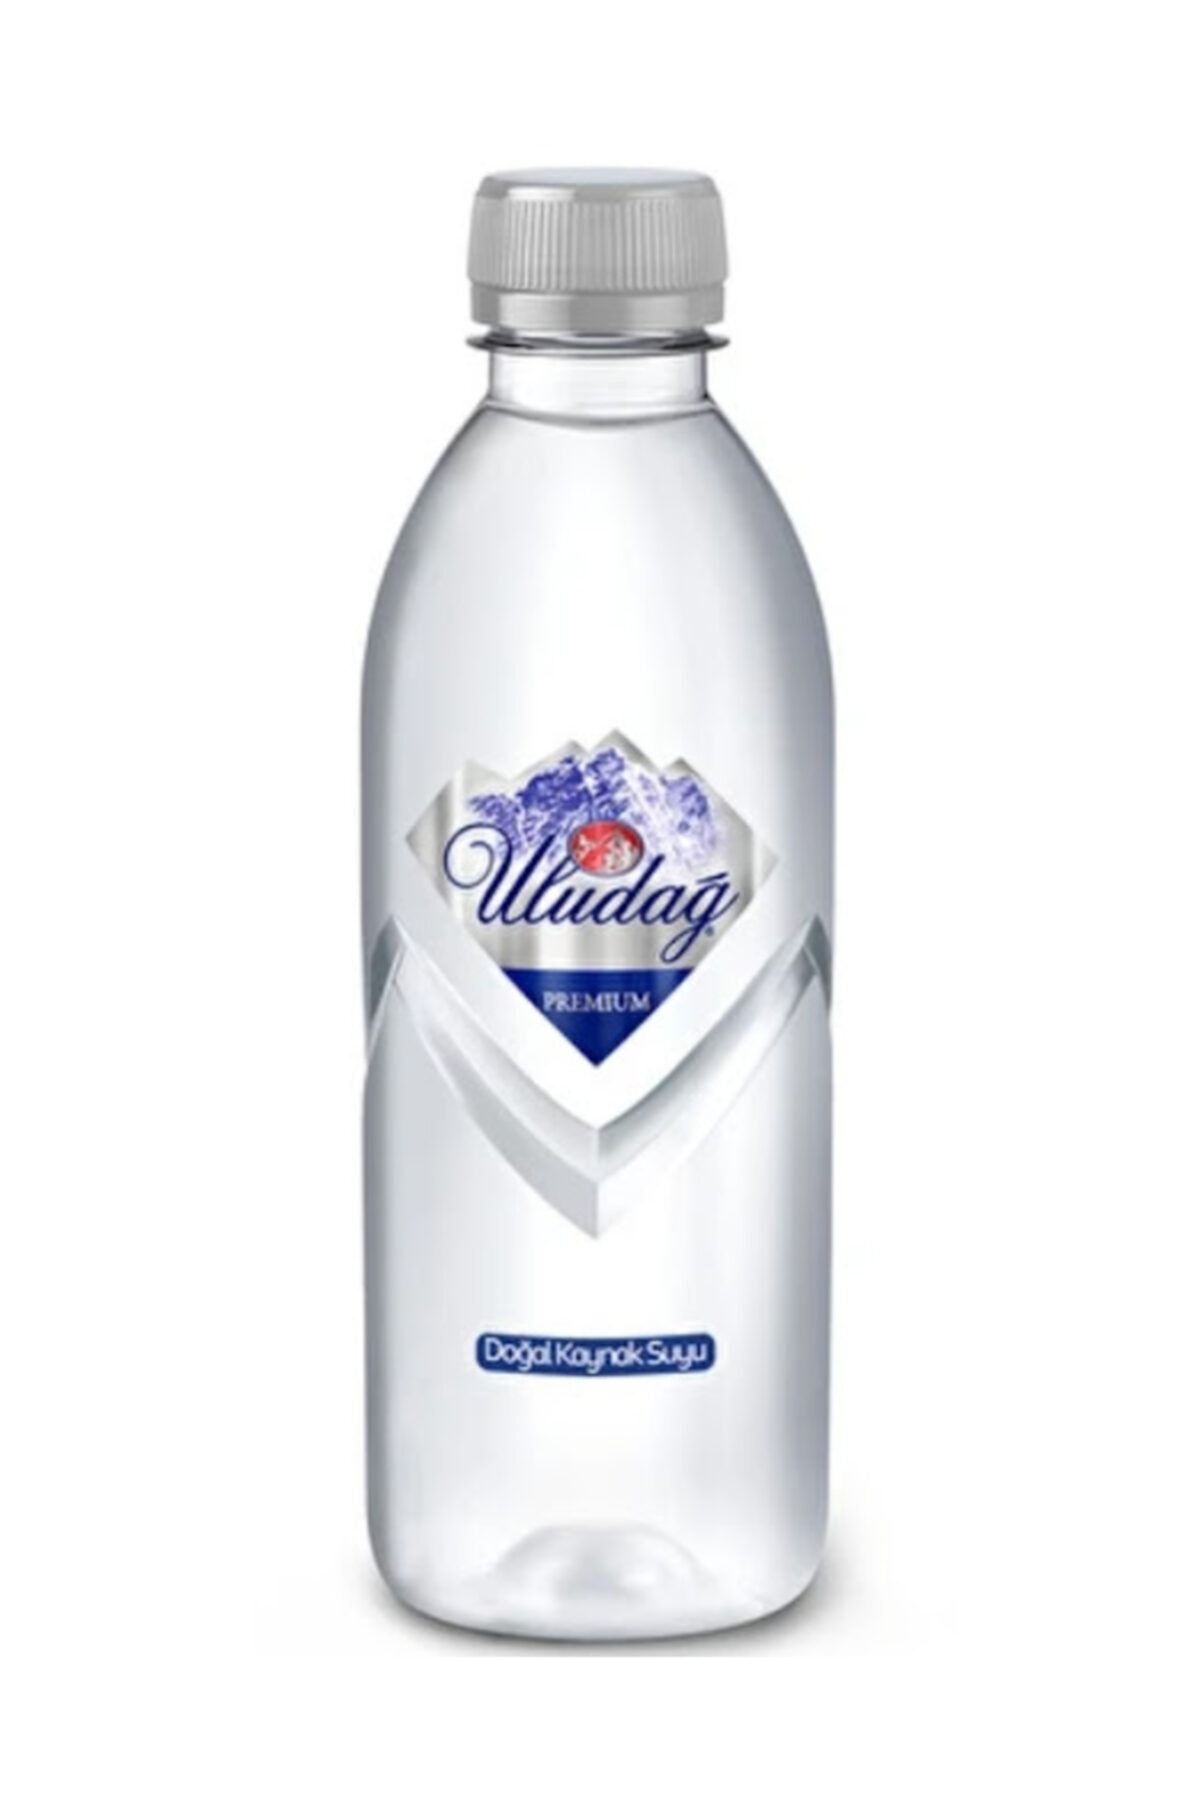 Uludağ Premium Uludağ Premıum 400ml Su